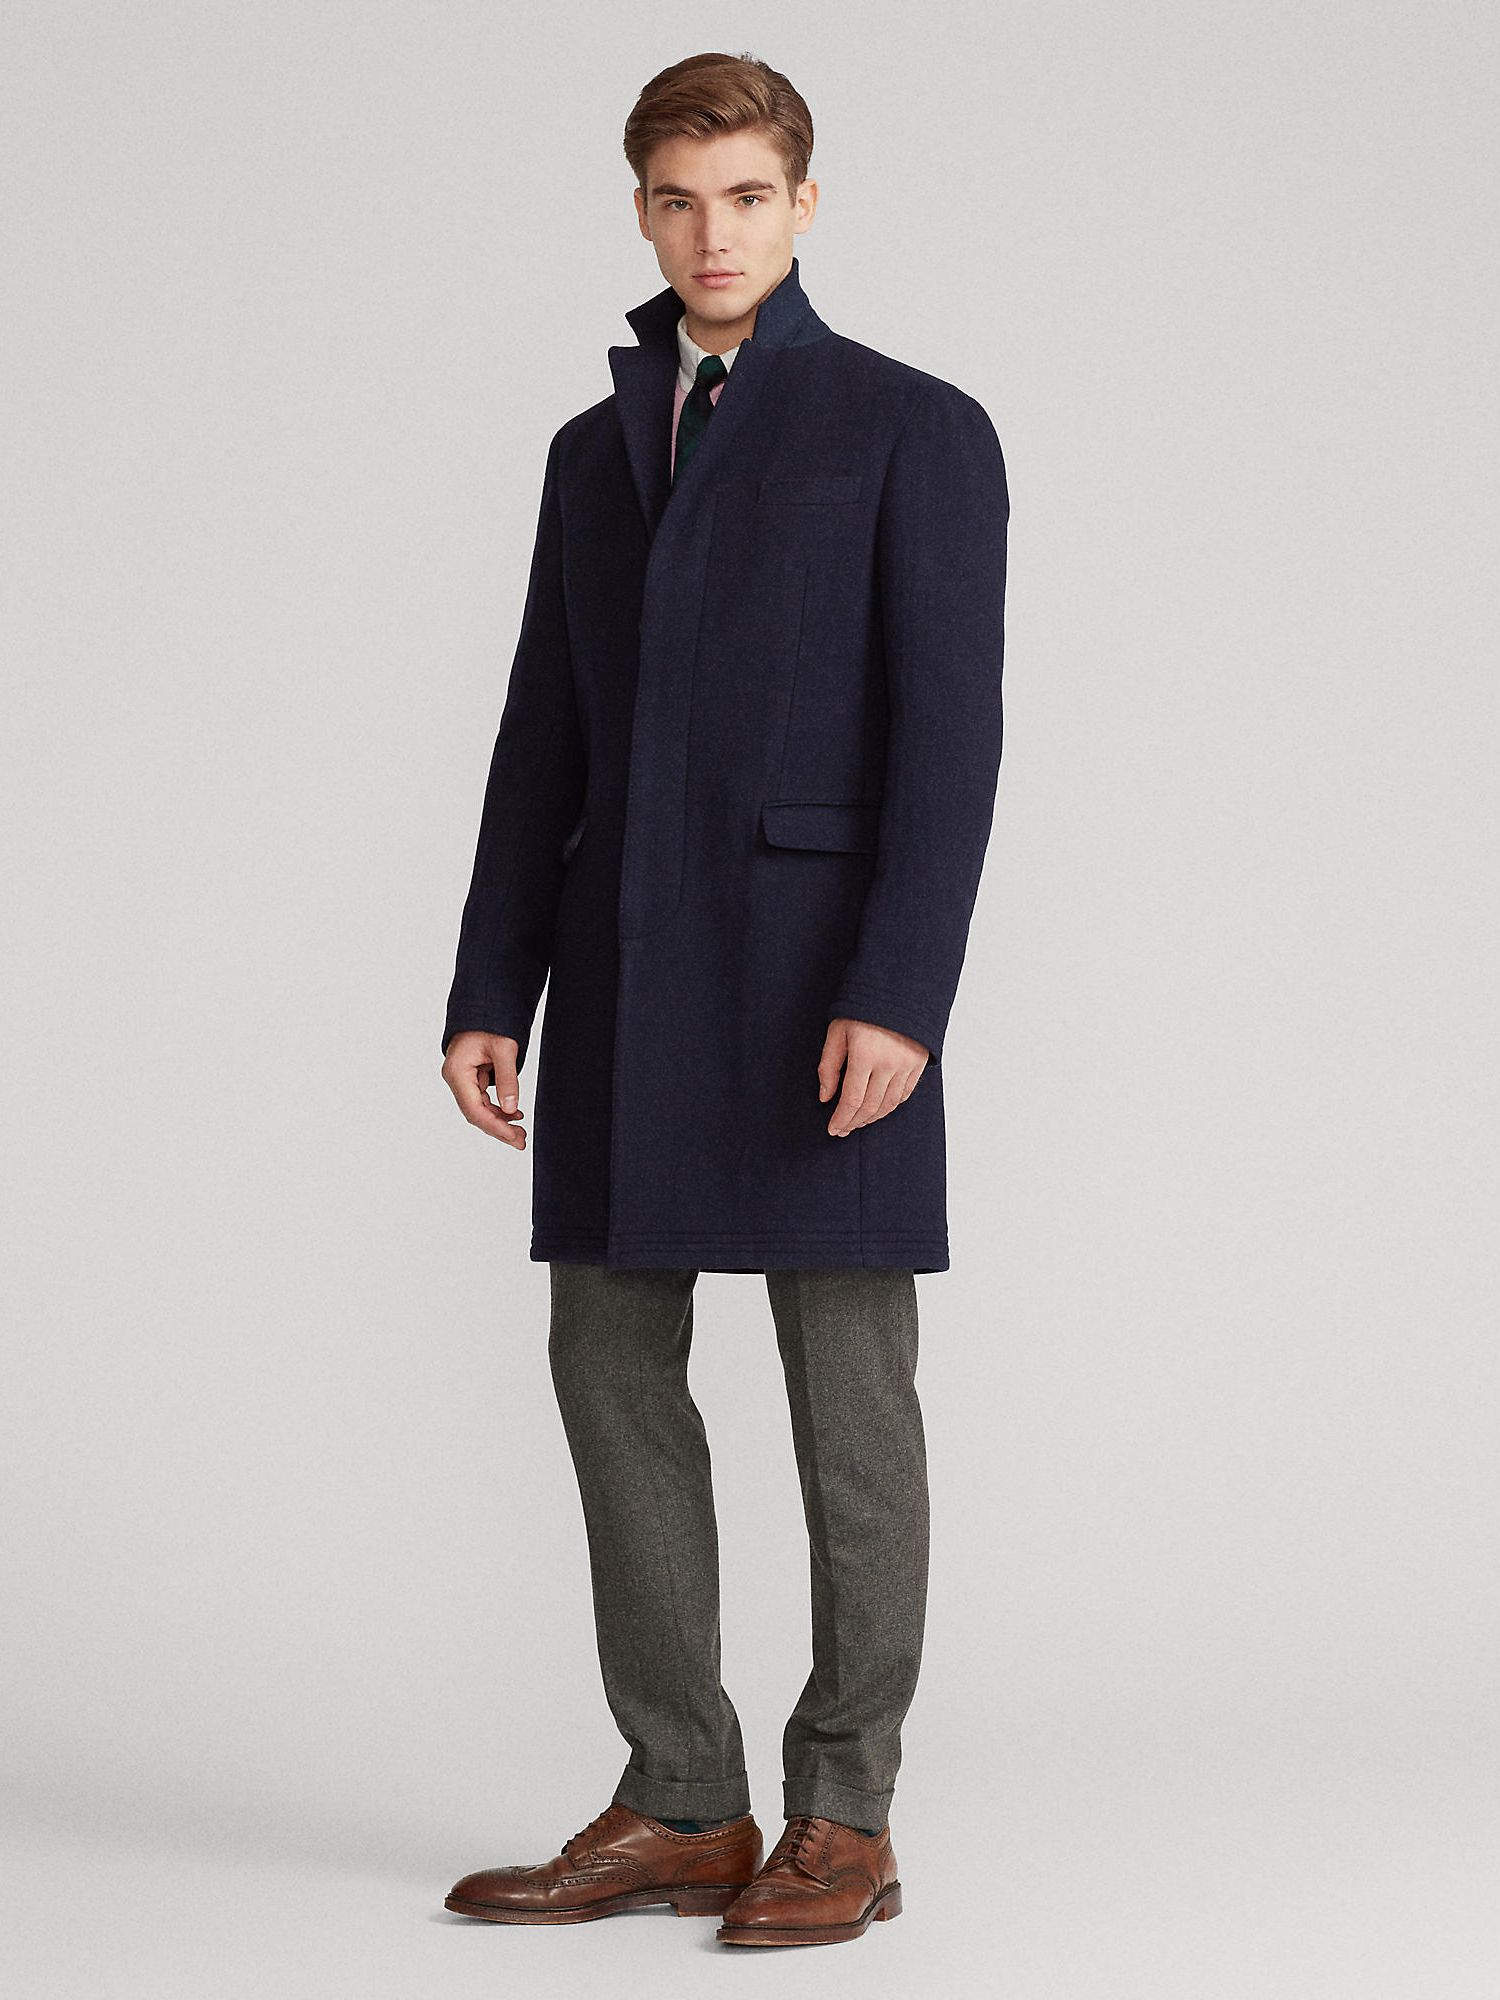 Polo Ralph Lauren Paddock Wool Blend Tailored Coat, Navy/Blackwatch